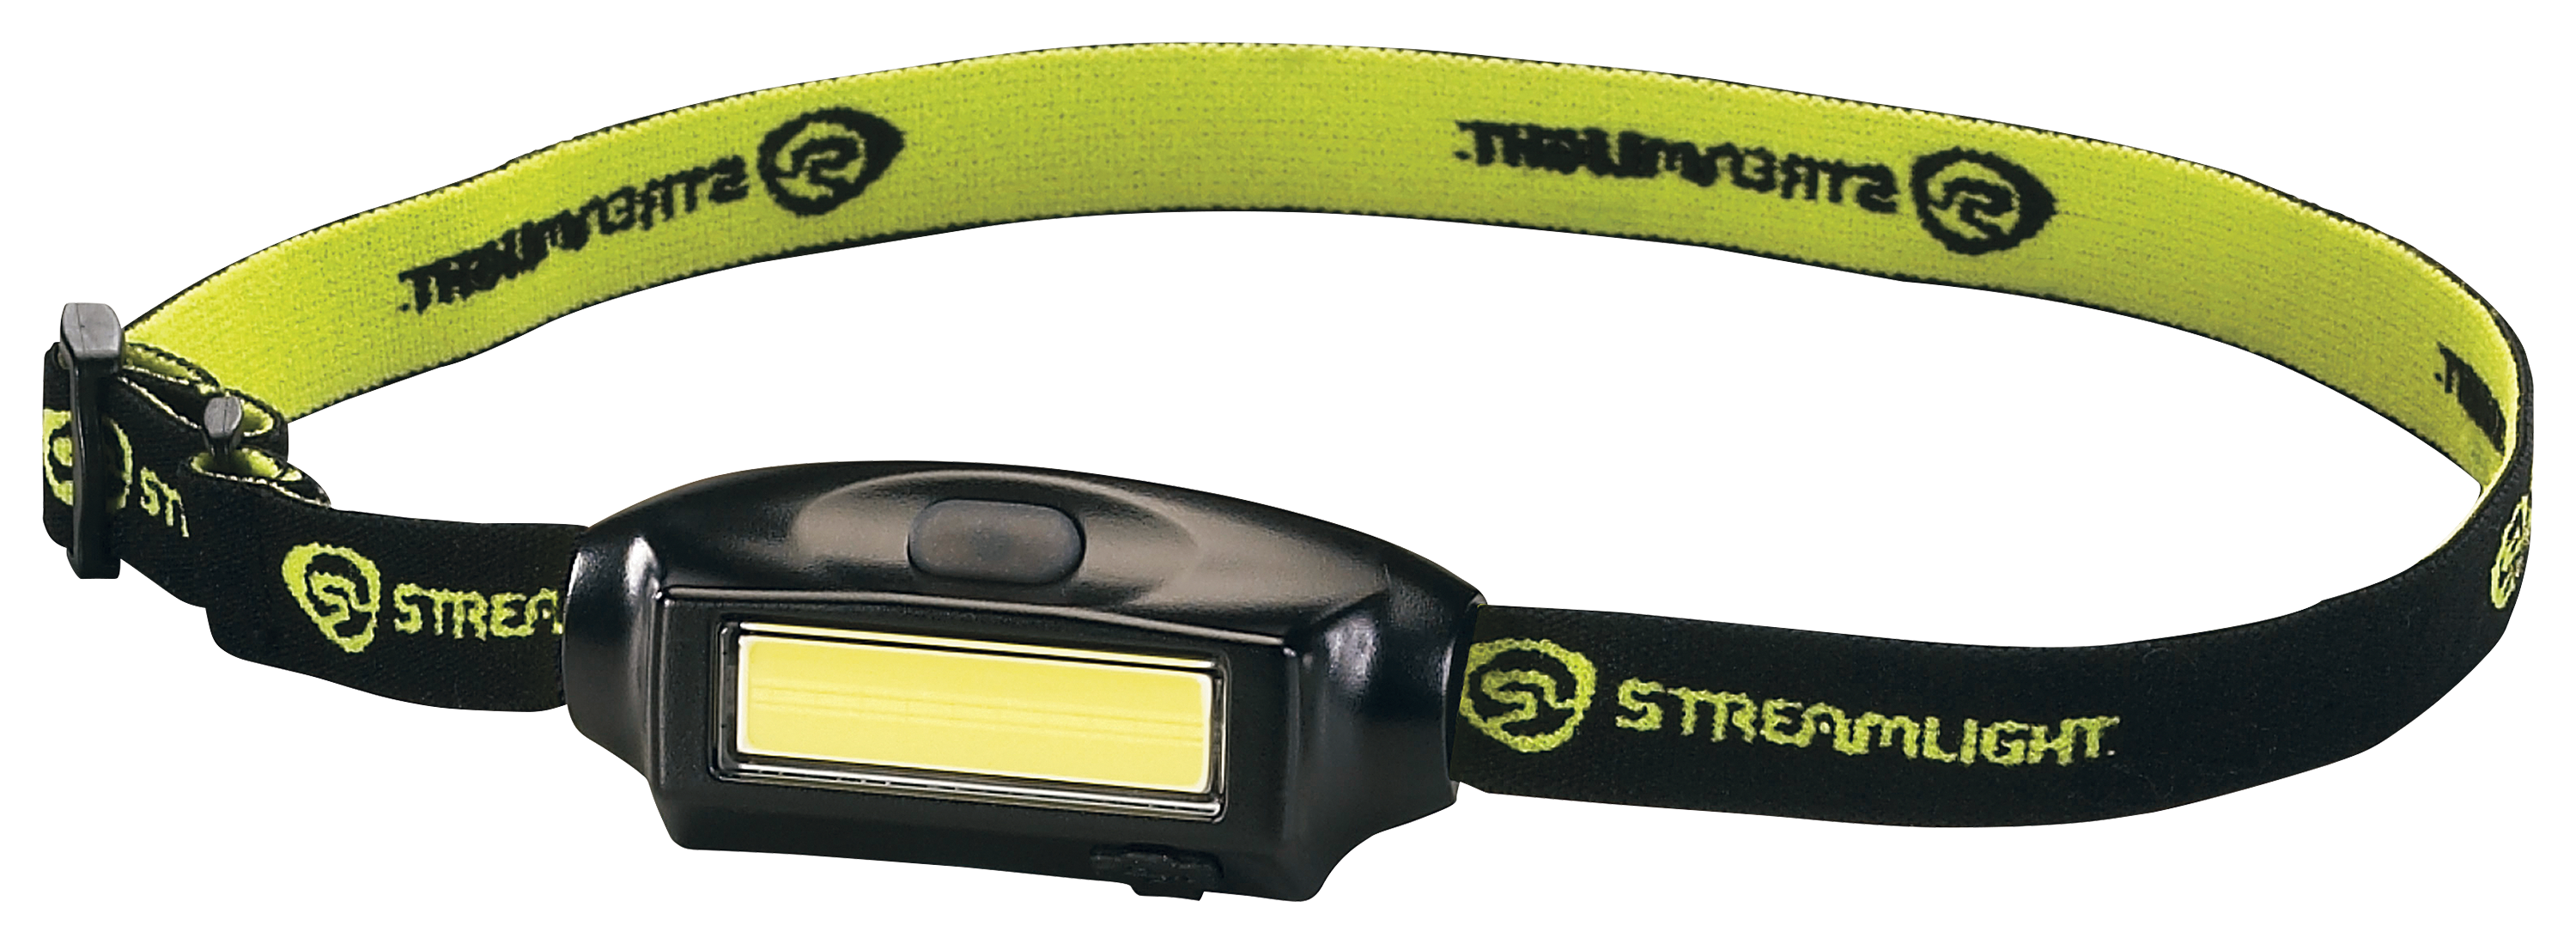 Streamlight Bandit USB Rechargeable Headlamp - Black